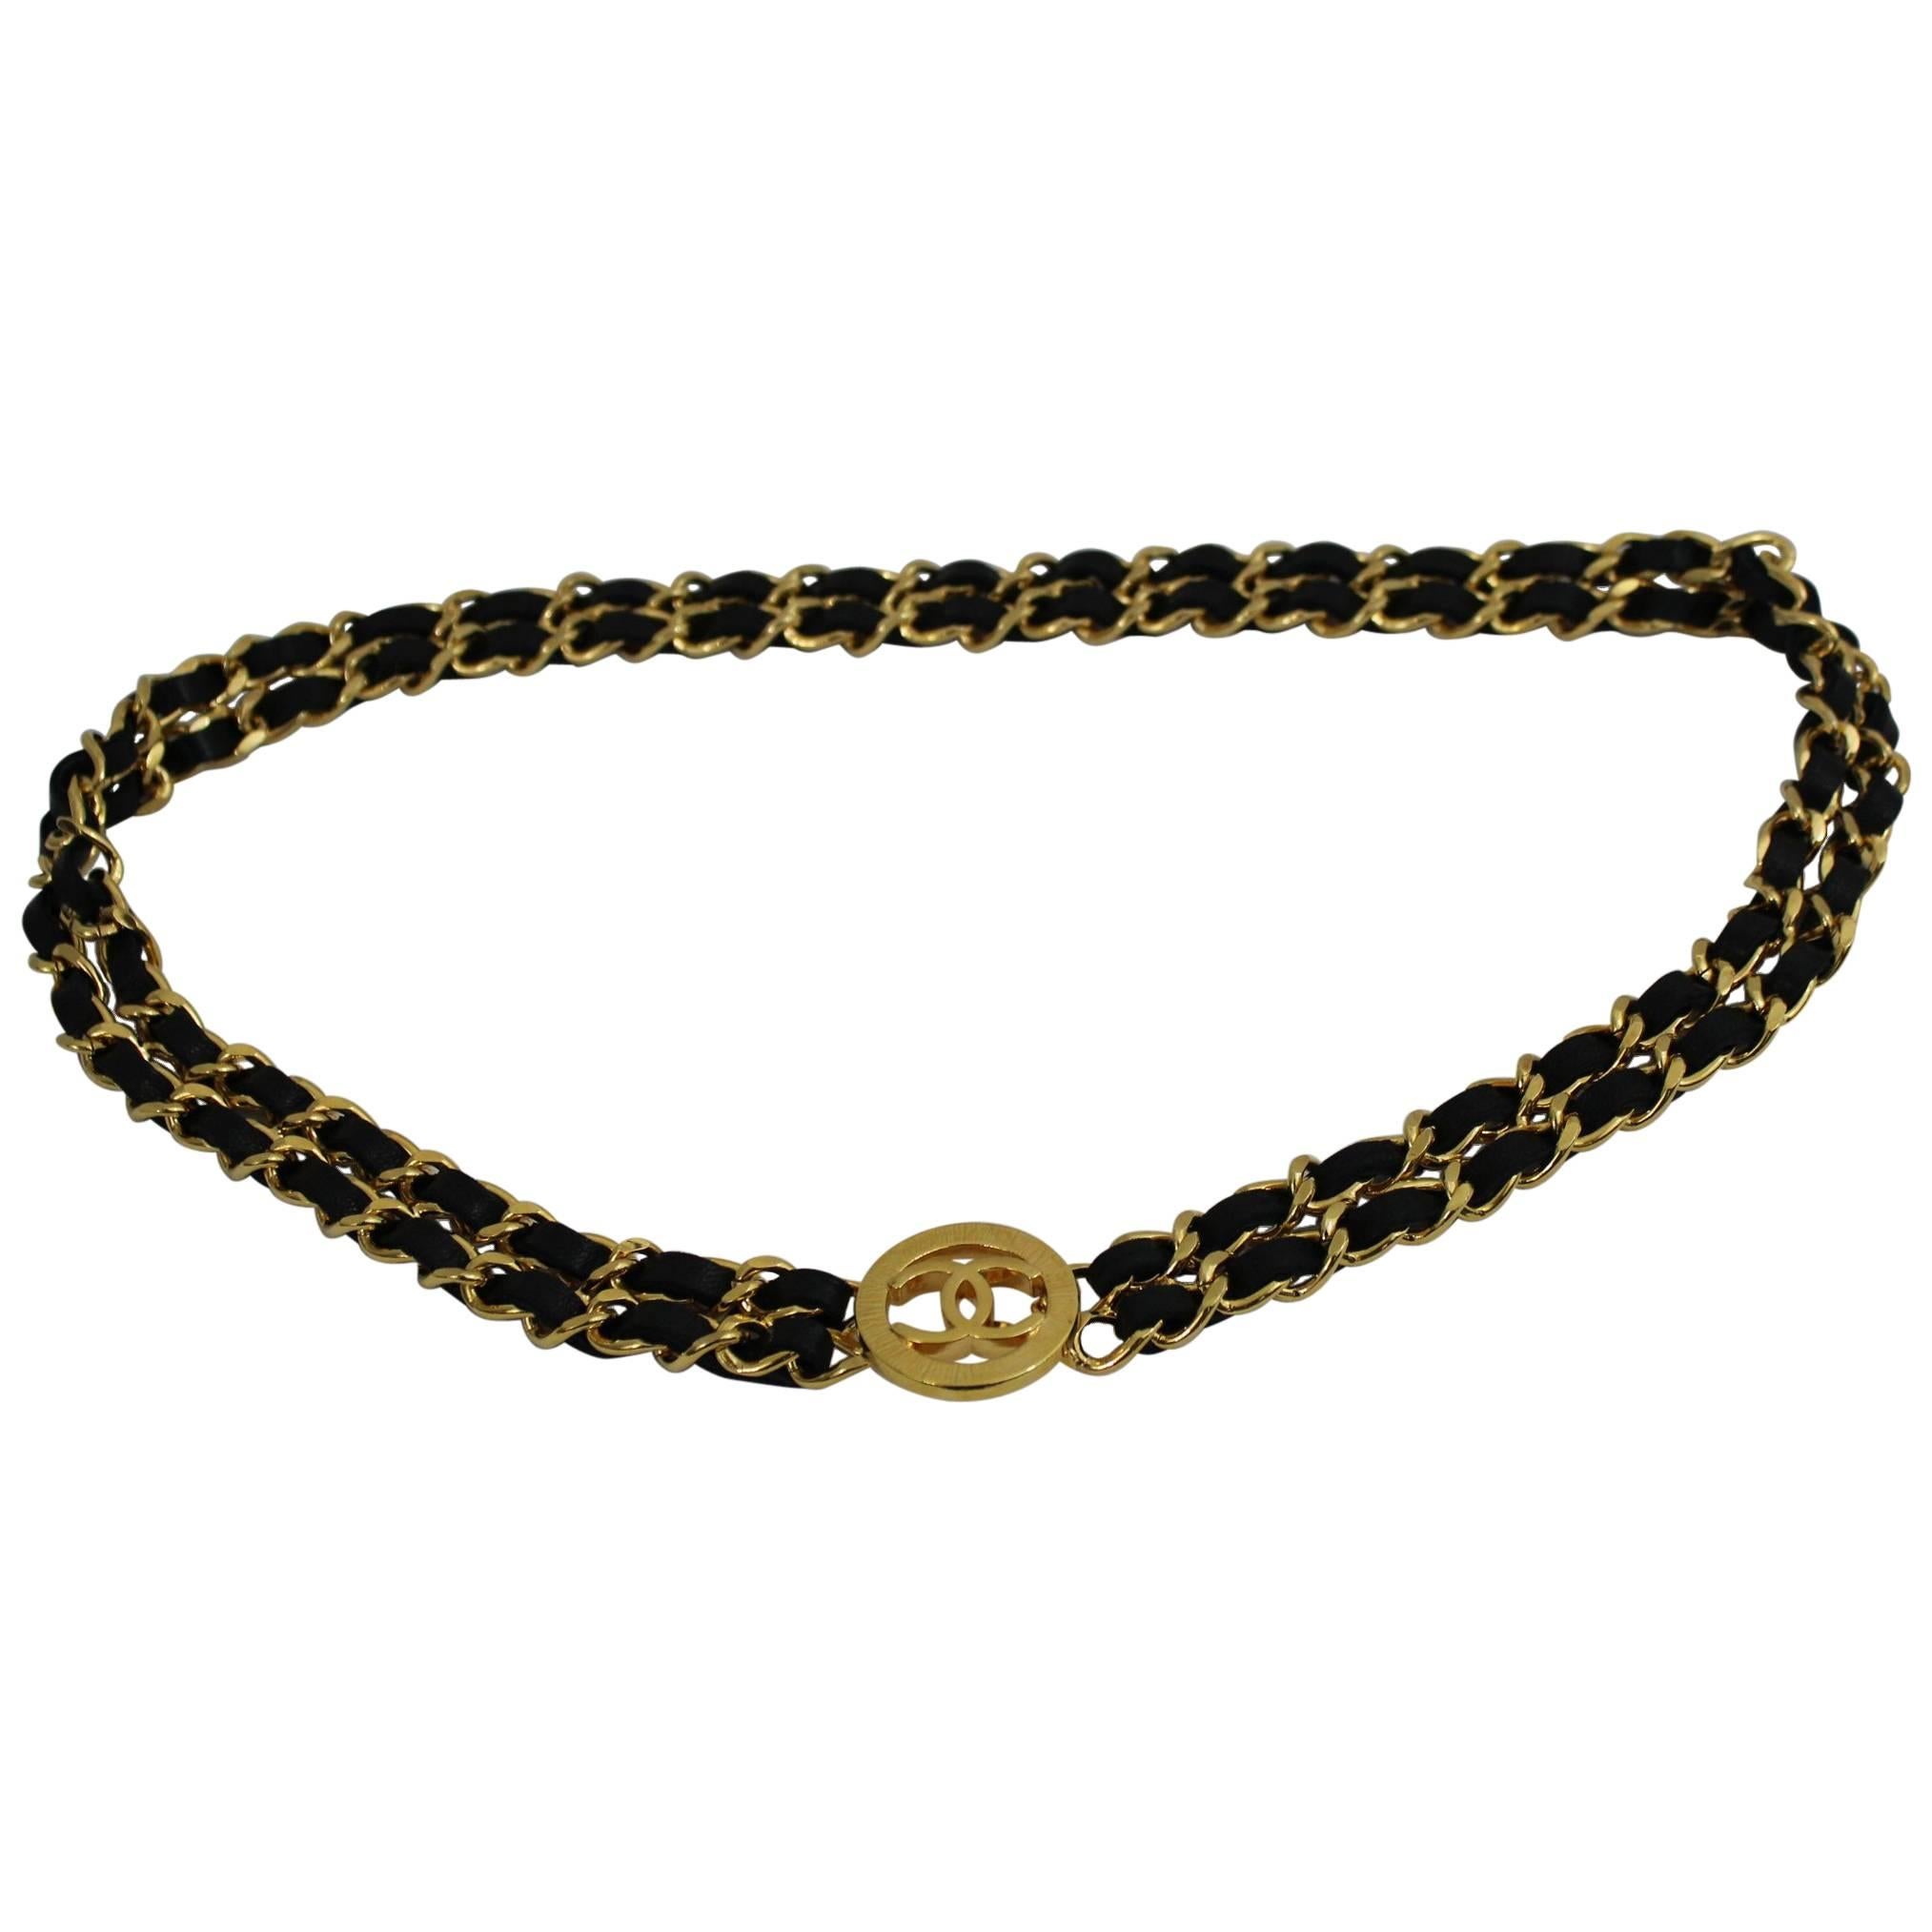 Vintage Chanel  Golden metal and Black Leather Chain Belt